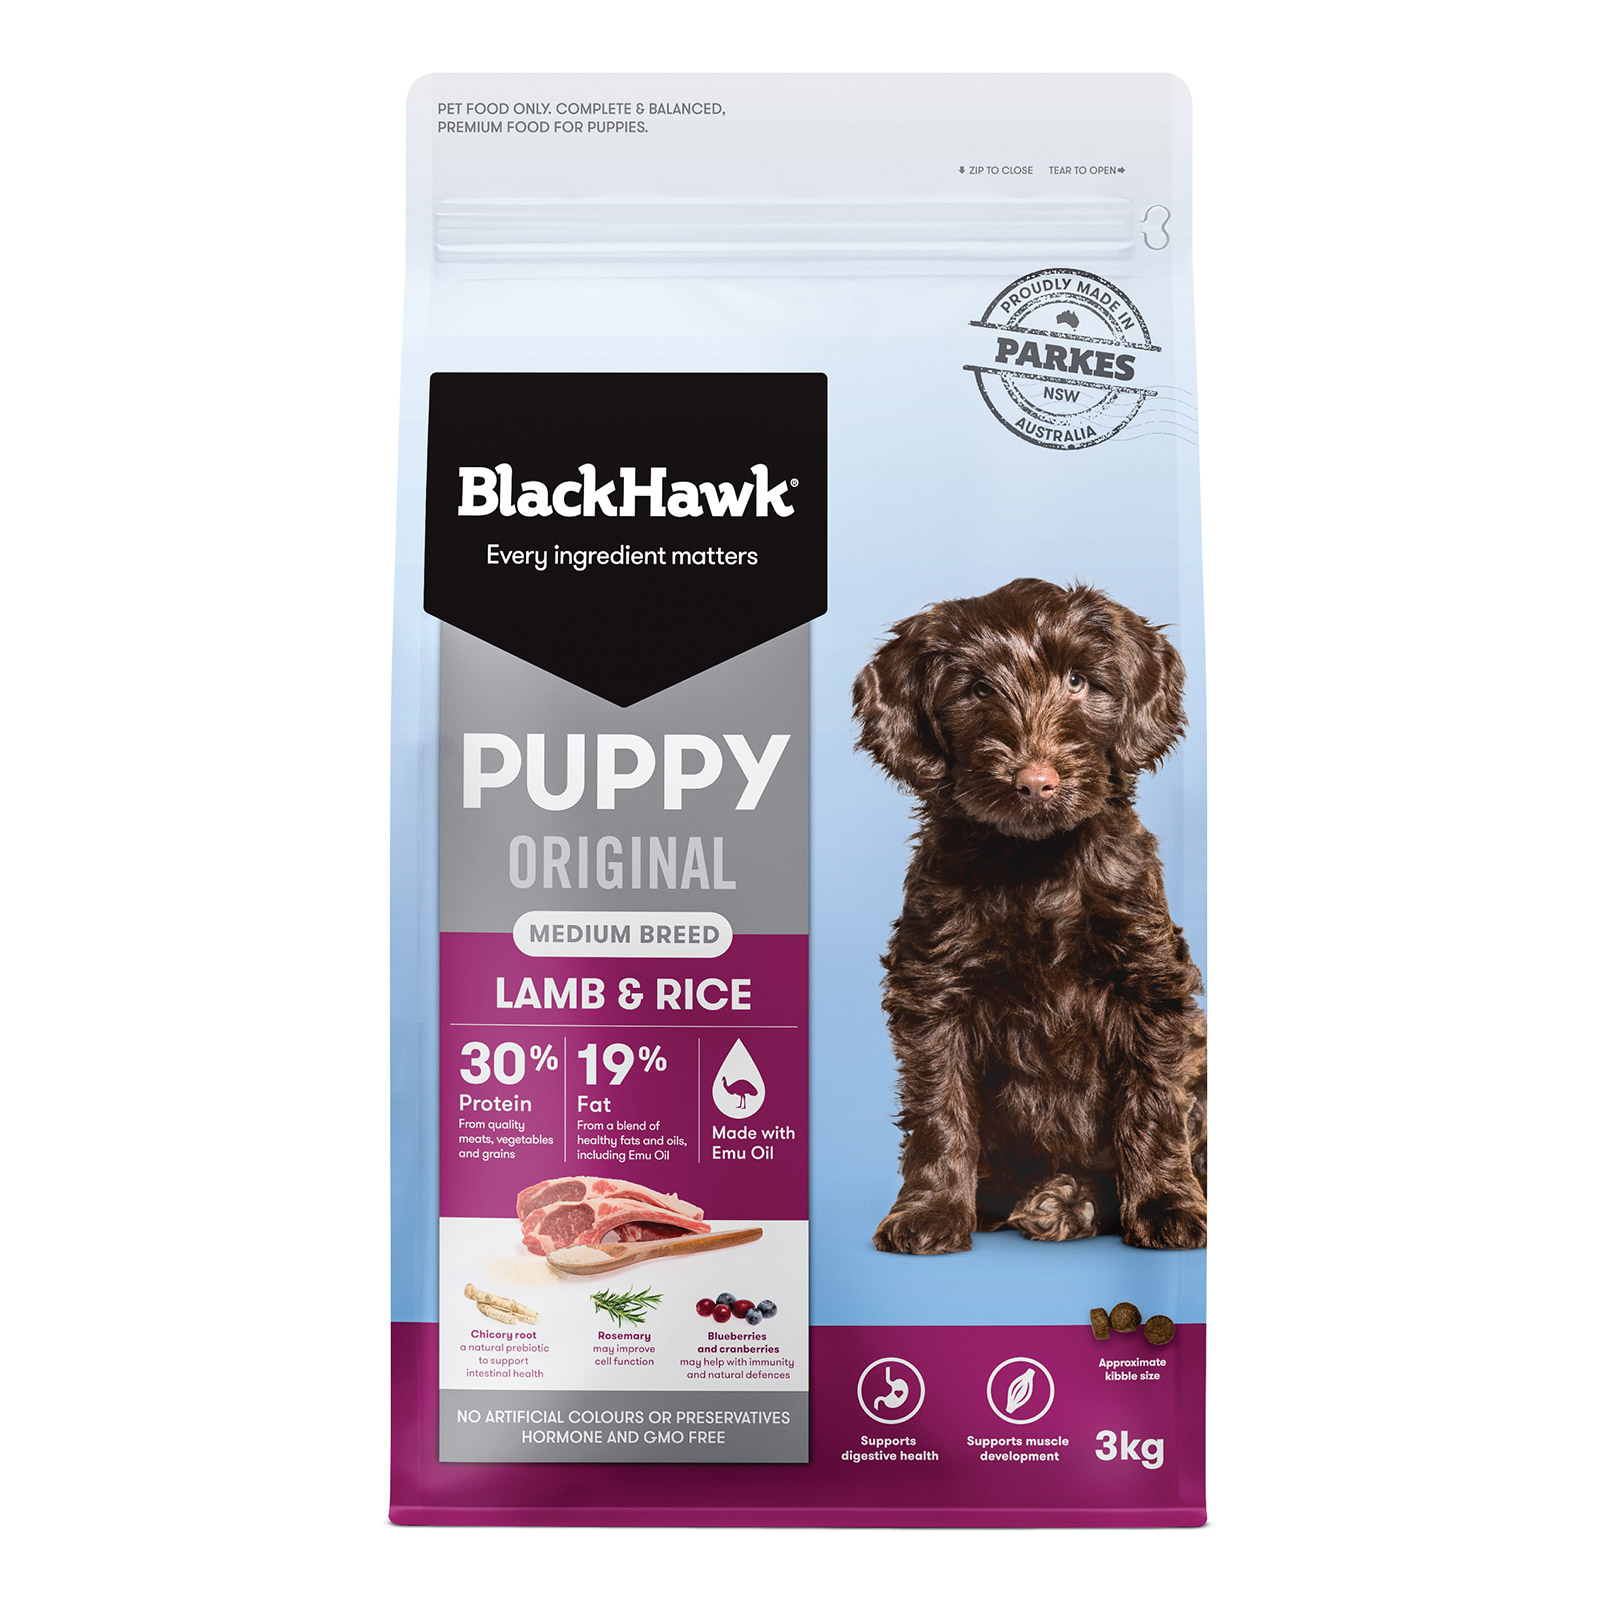 Black Hawk Puppy Original Medium Breed Lamb and Rice